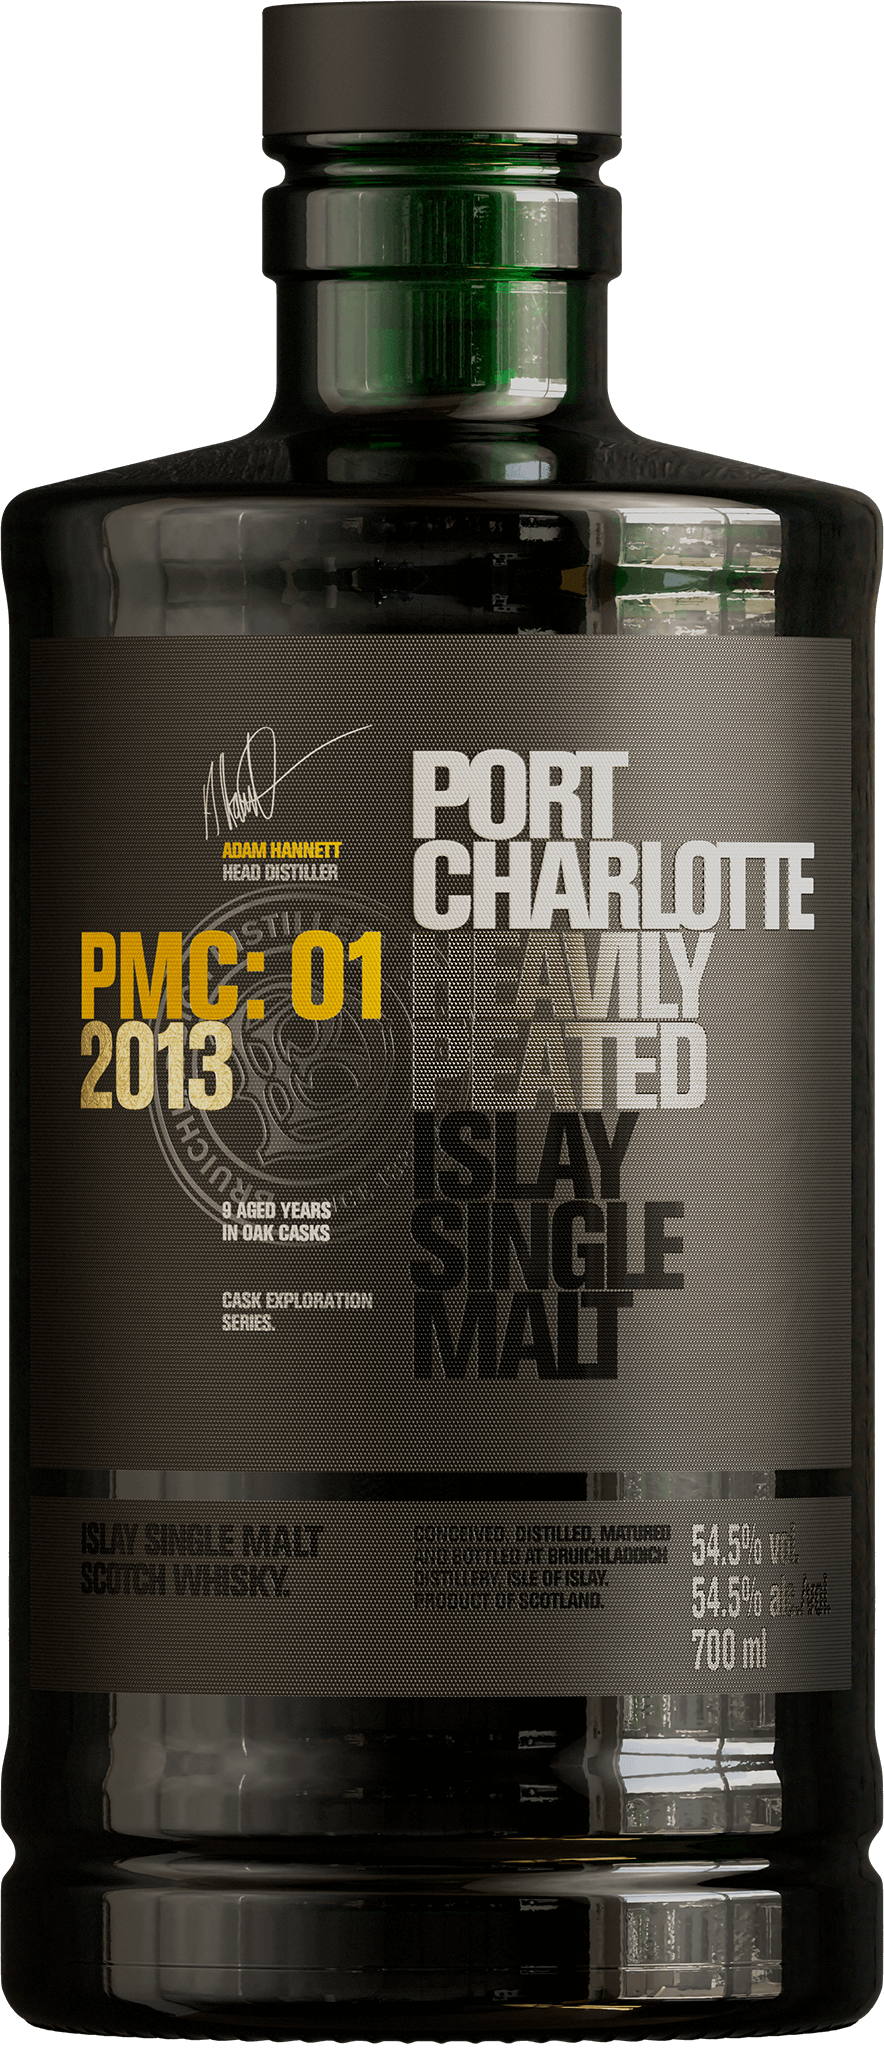 Bruichladdich Port Charlotte PMC:01 2013 Heavily Peated 750ml